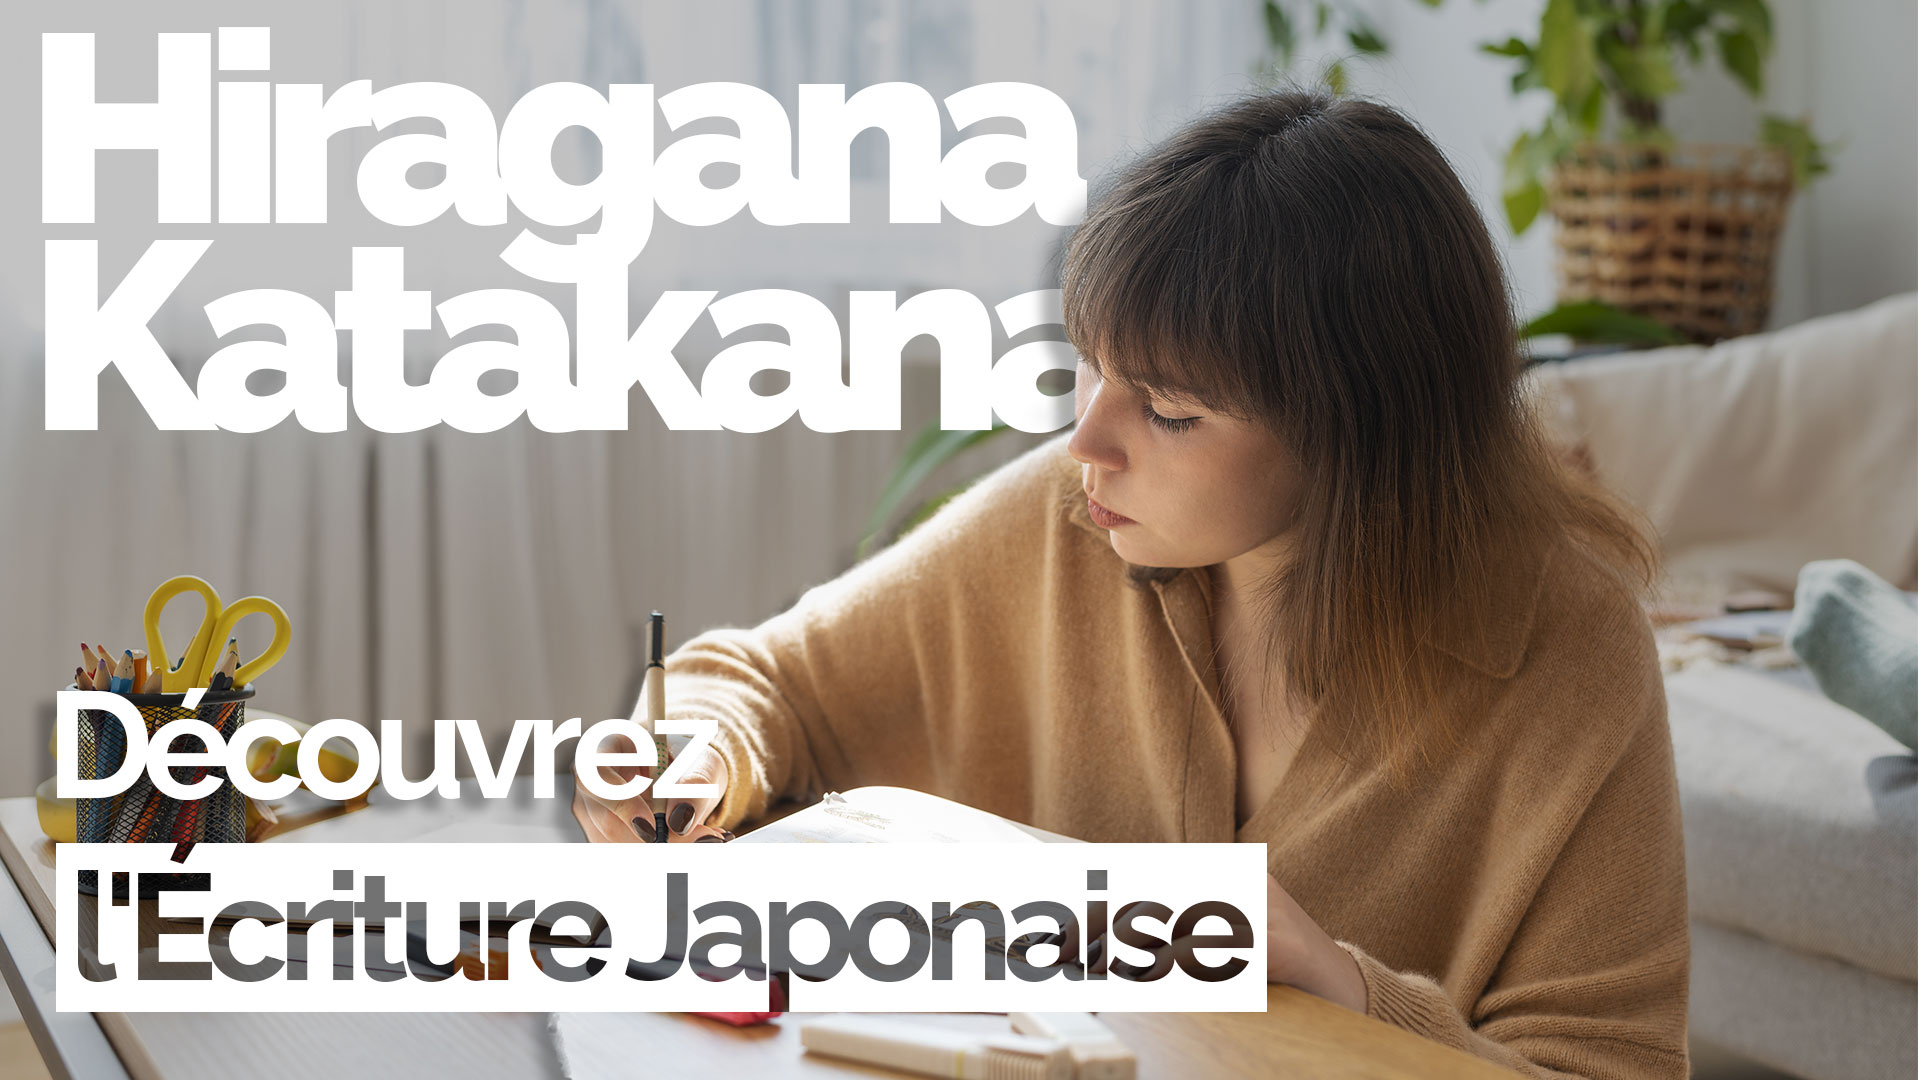 hiragana et katakana : les origines, les rôles et les subtilités de ces 46 caractères phonétiques